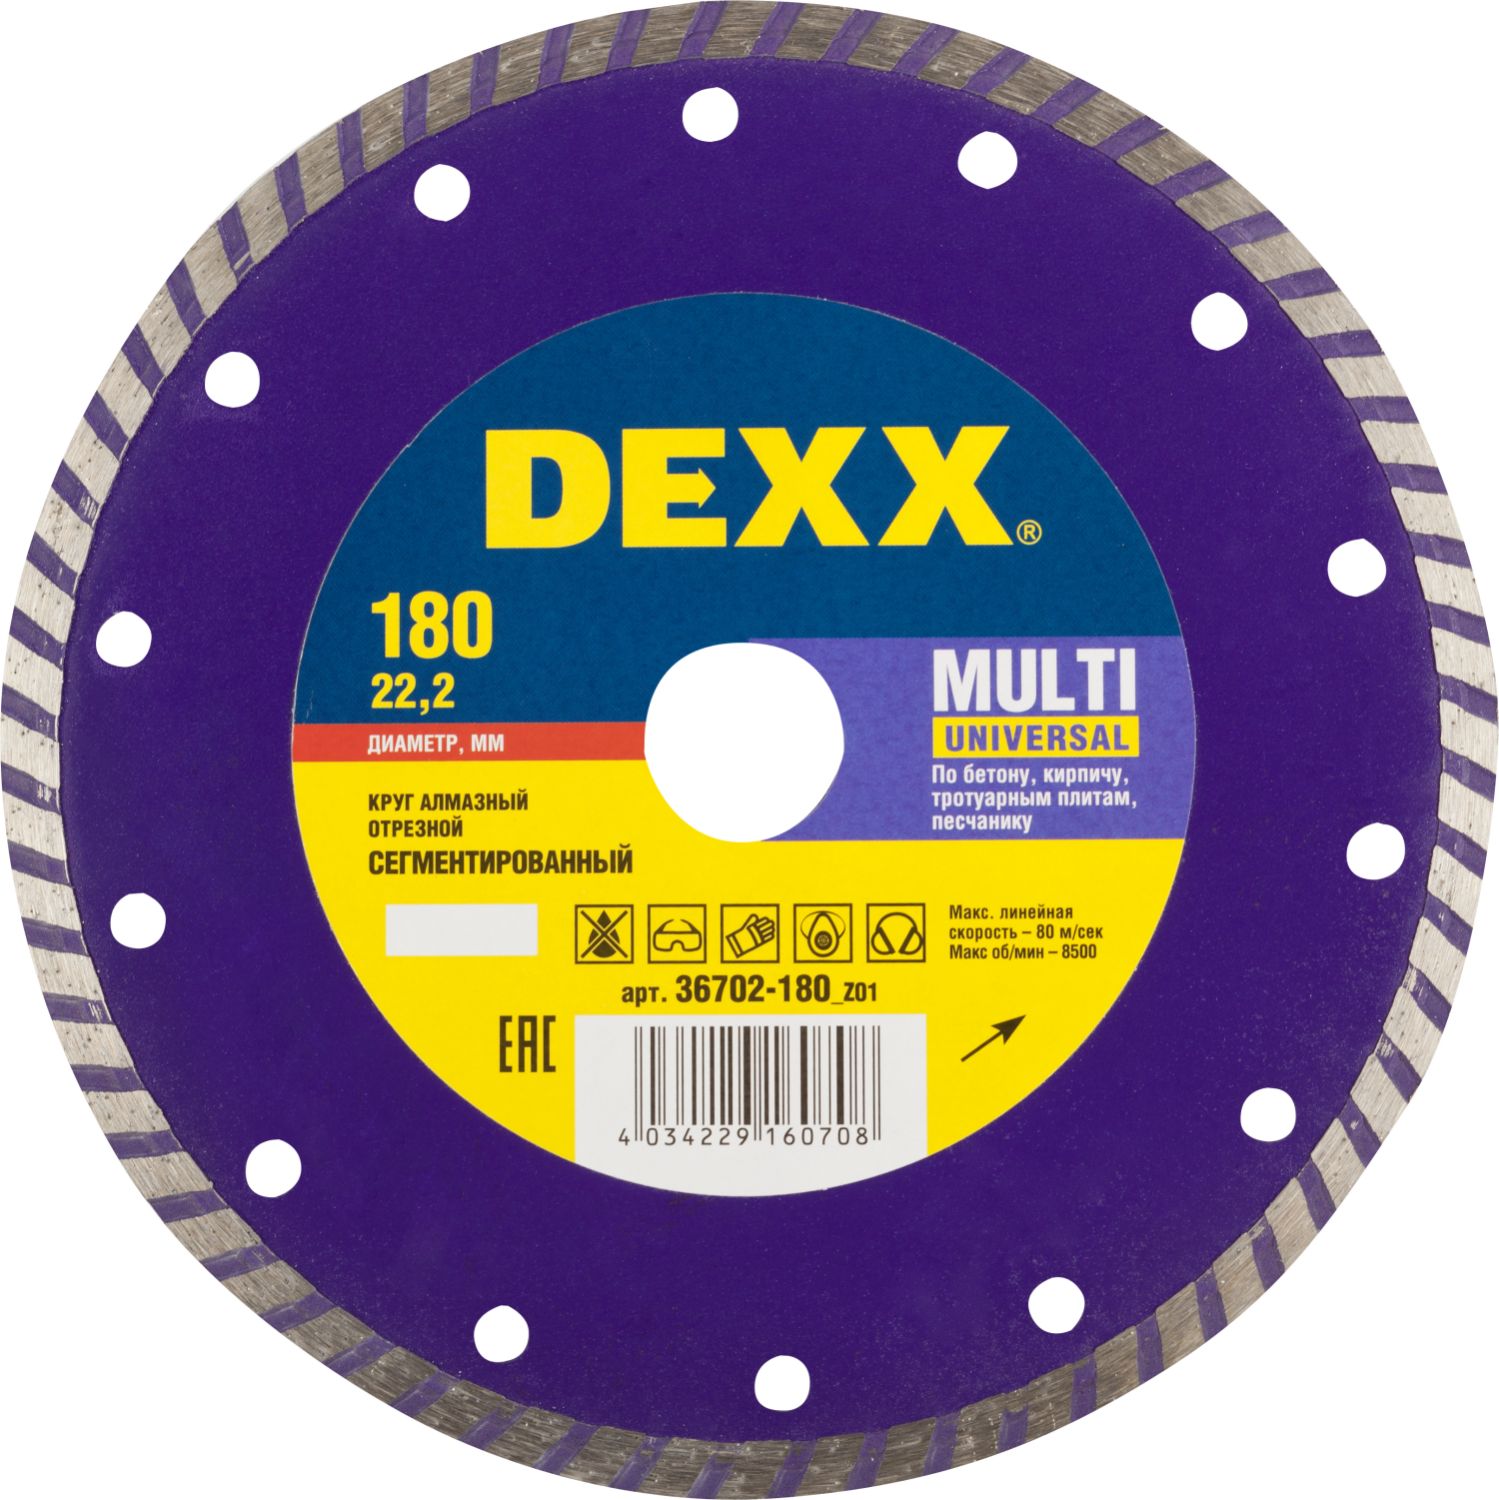 DEXX Multi Universal, 180 , (22.2 , 7  2.3 ),    (36702-180)